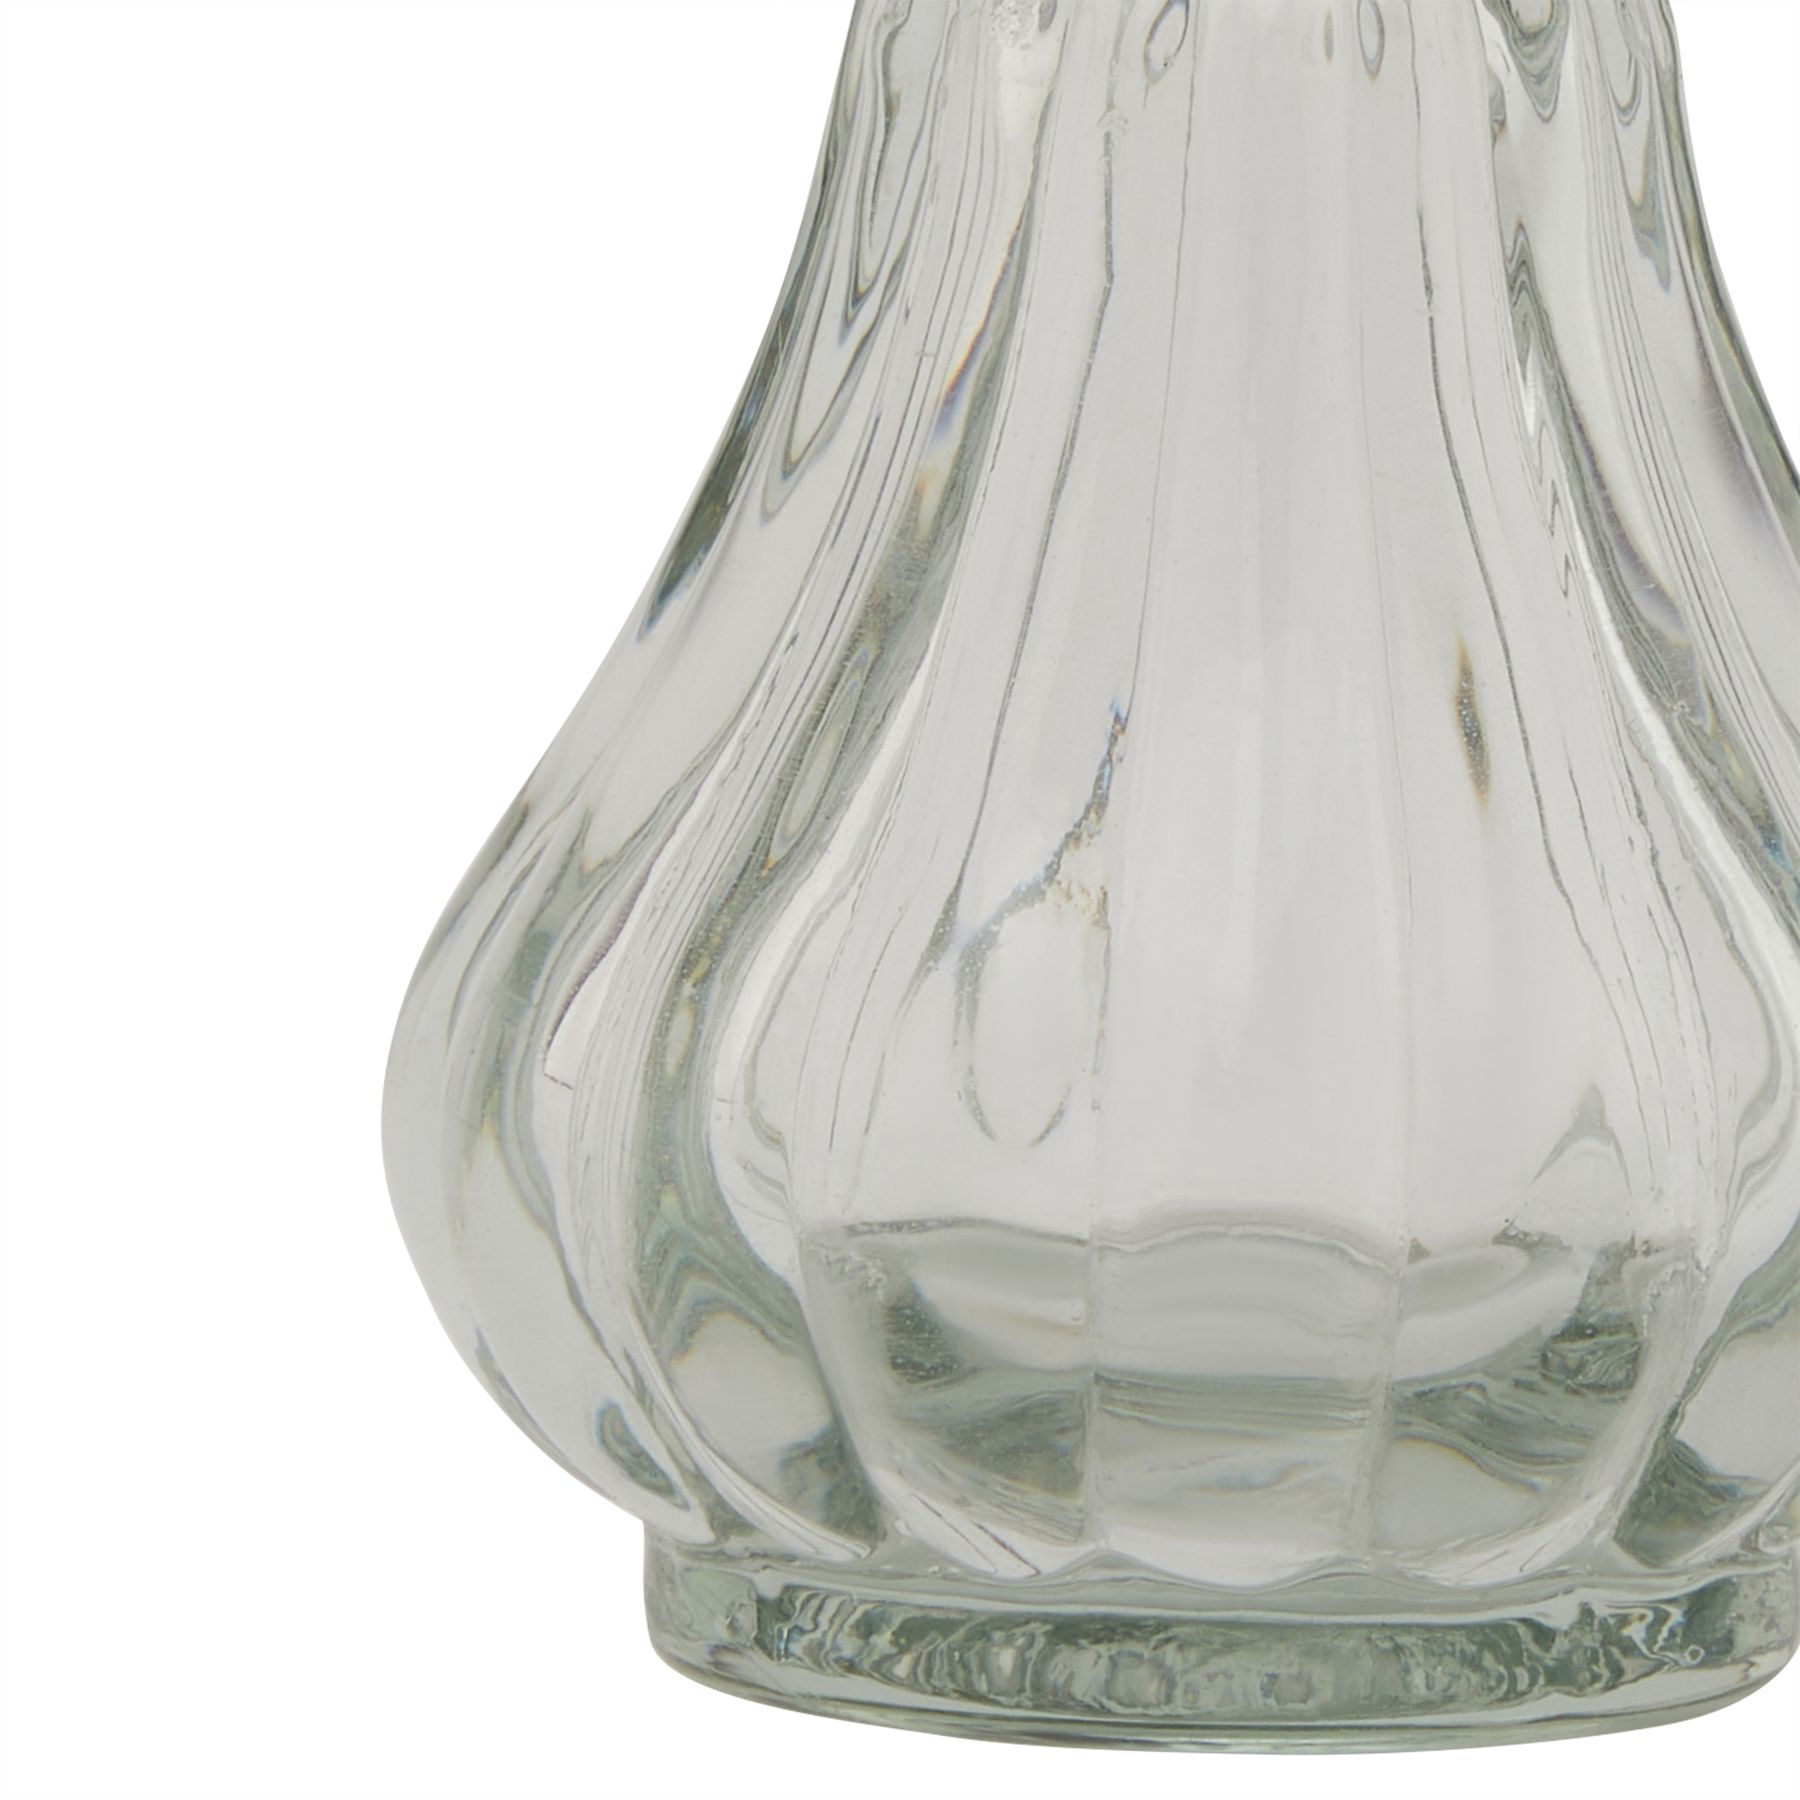 Batura Bud Vase Small - Image 2